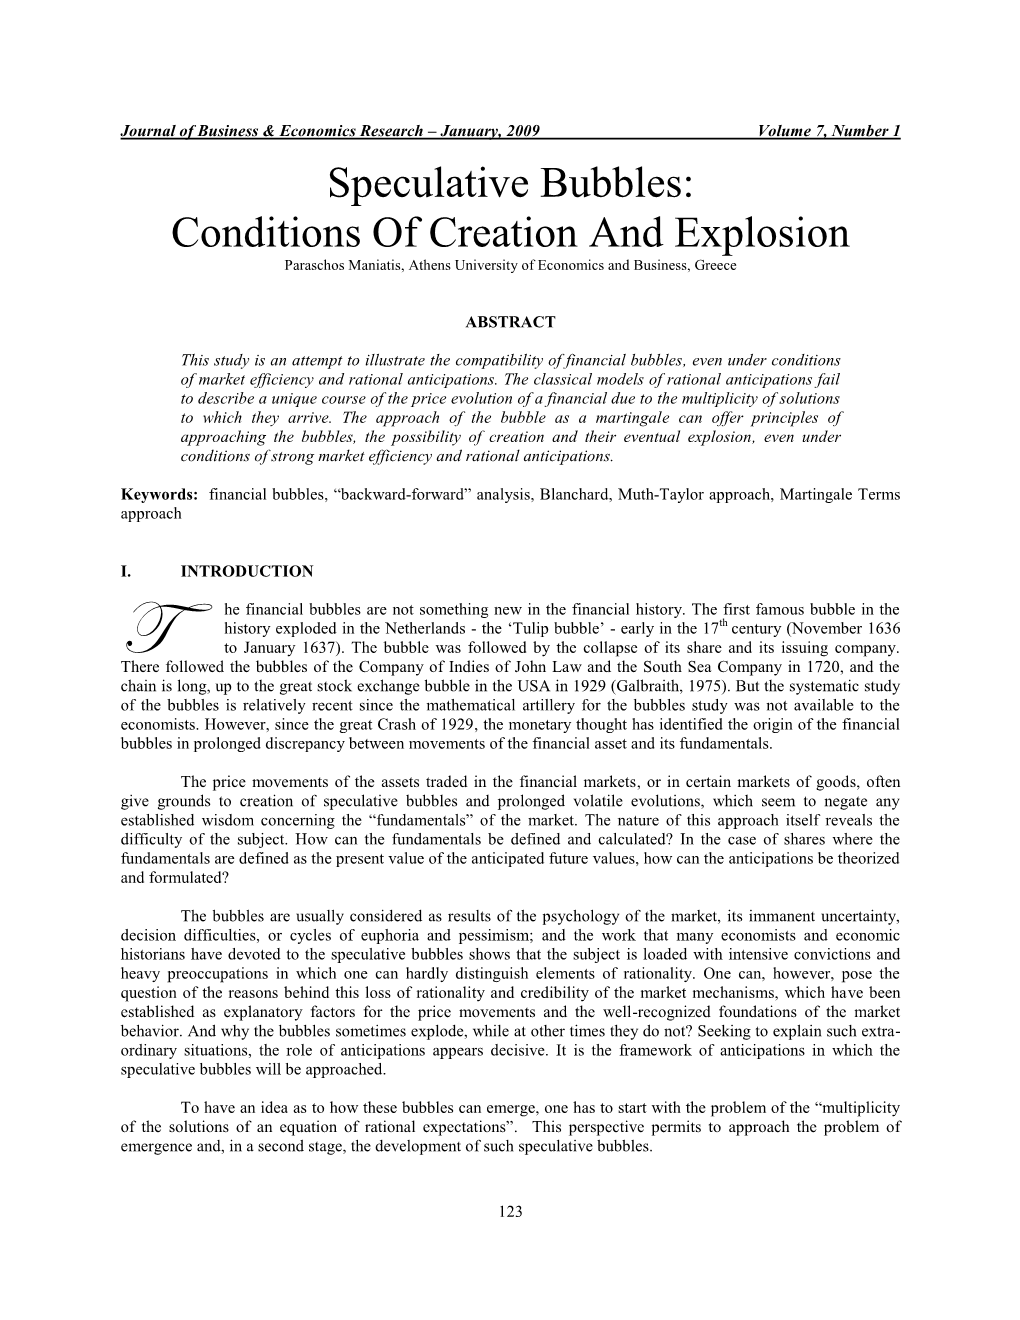 The Speculative Bubbles